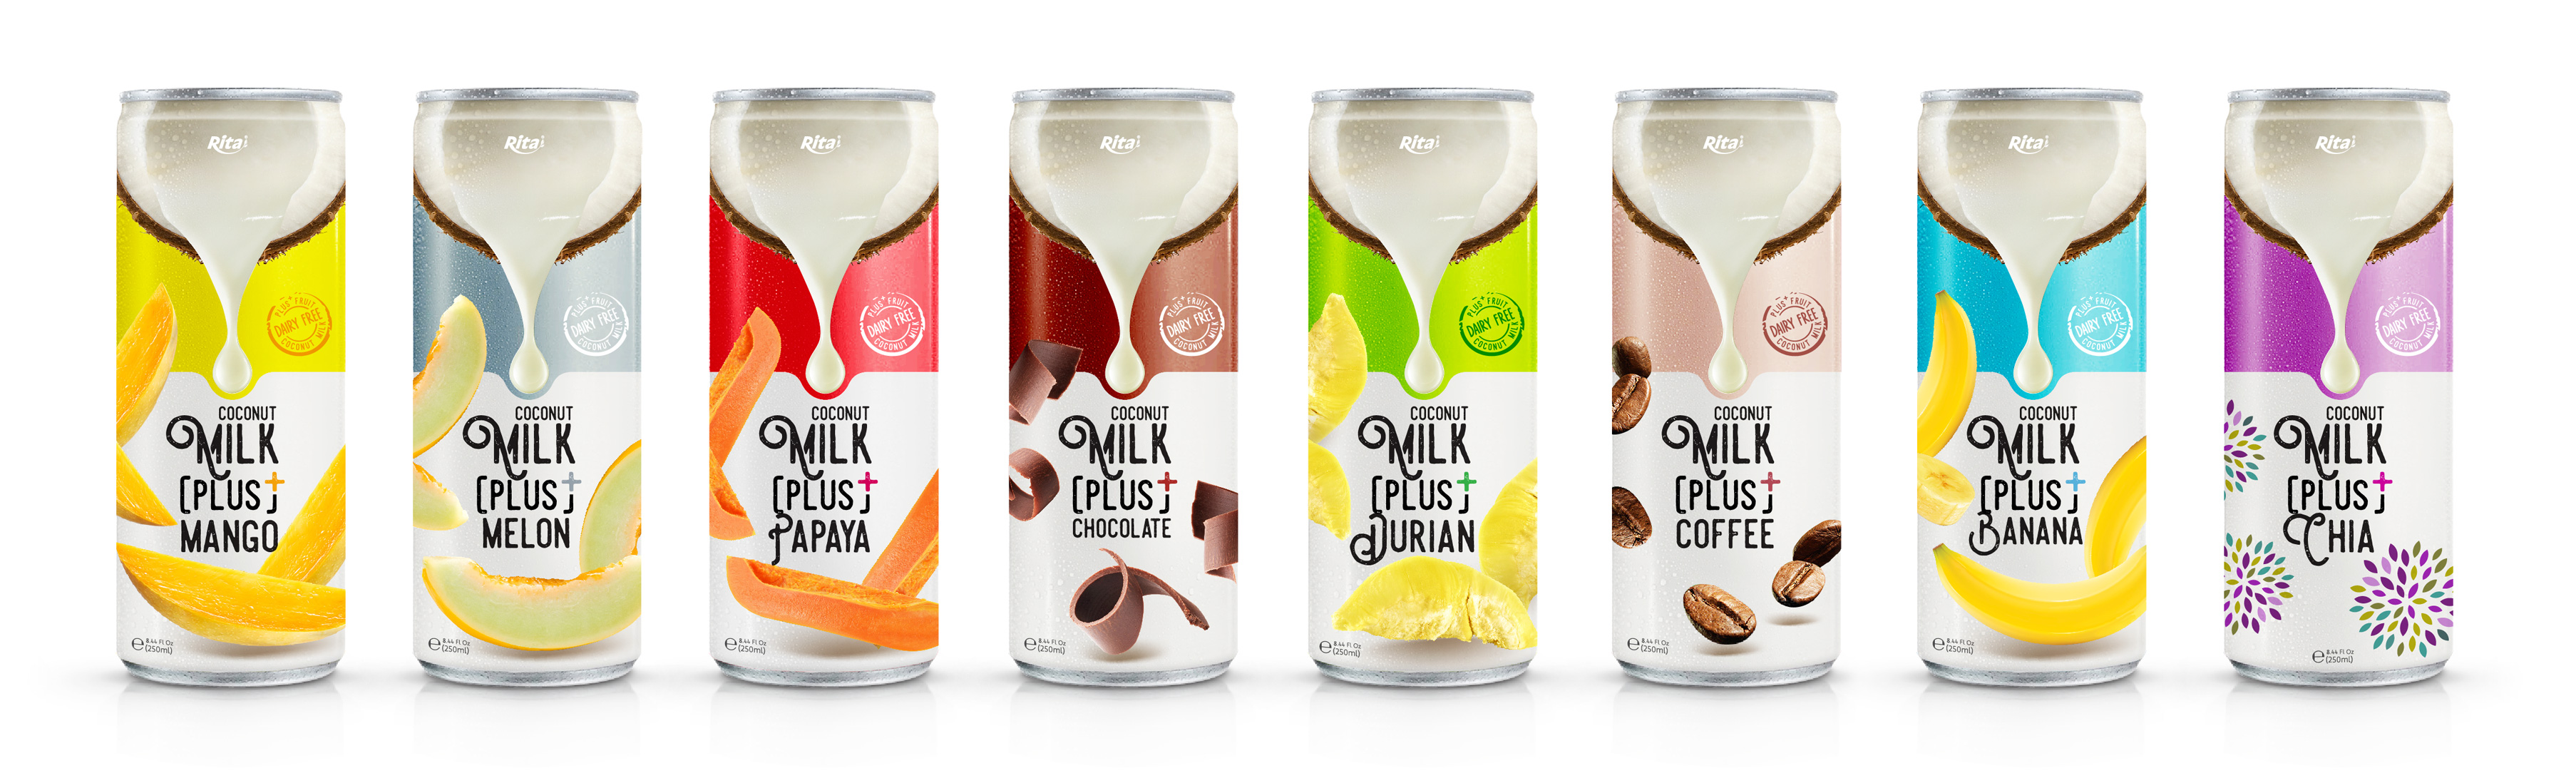 Coco milk plus chocolate flavour 250ml